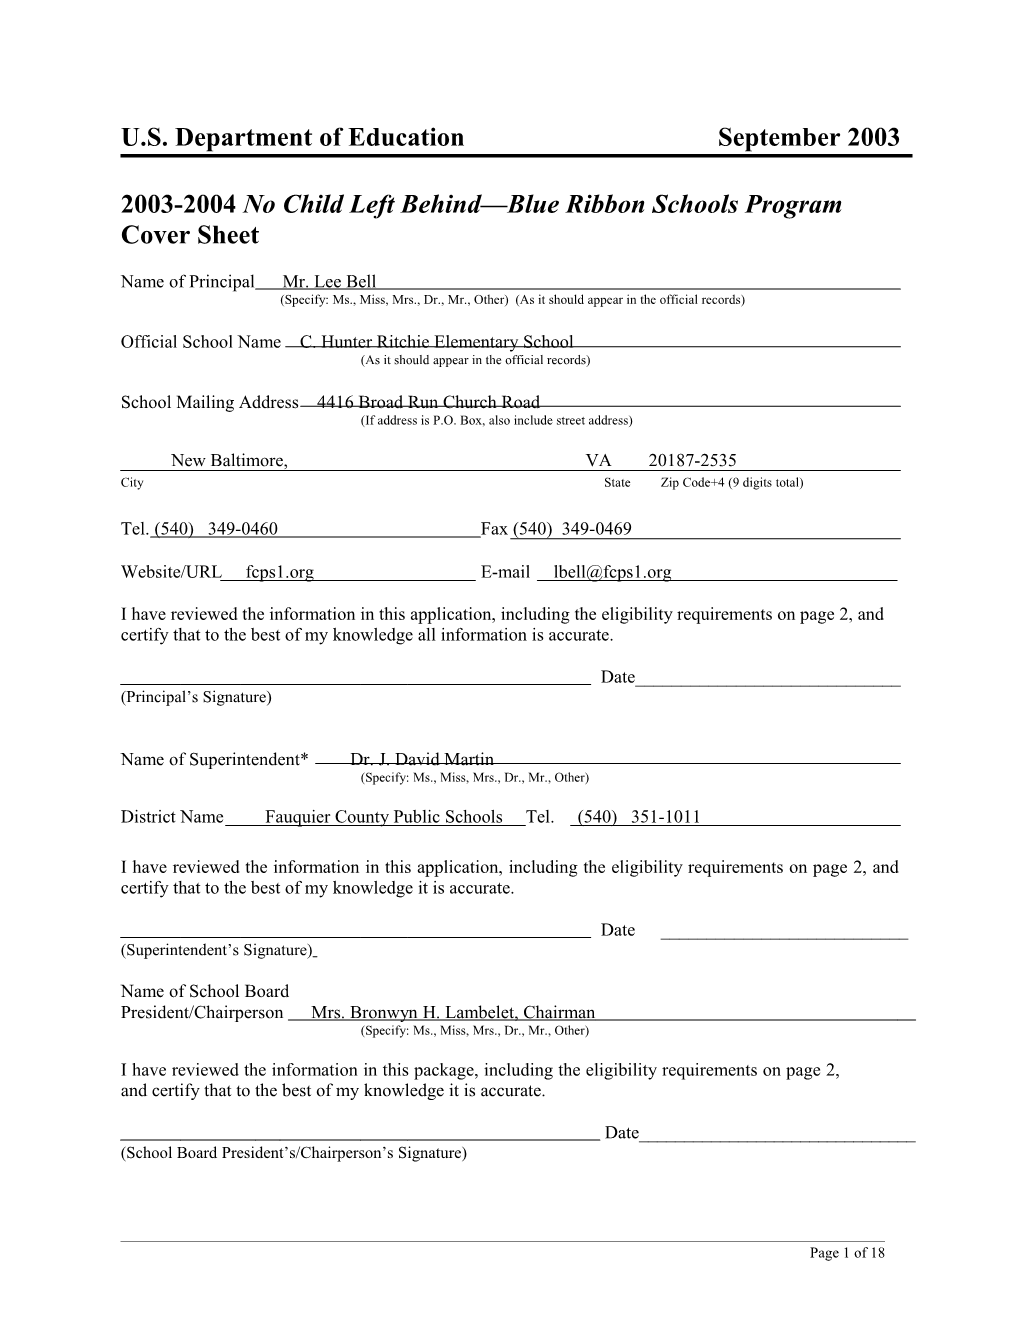 C. Hunter Ritchie Elementary School 2004 No Child Left Behind-Blue Ribbon School Application